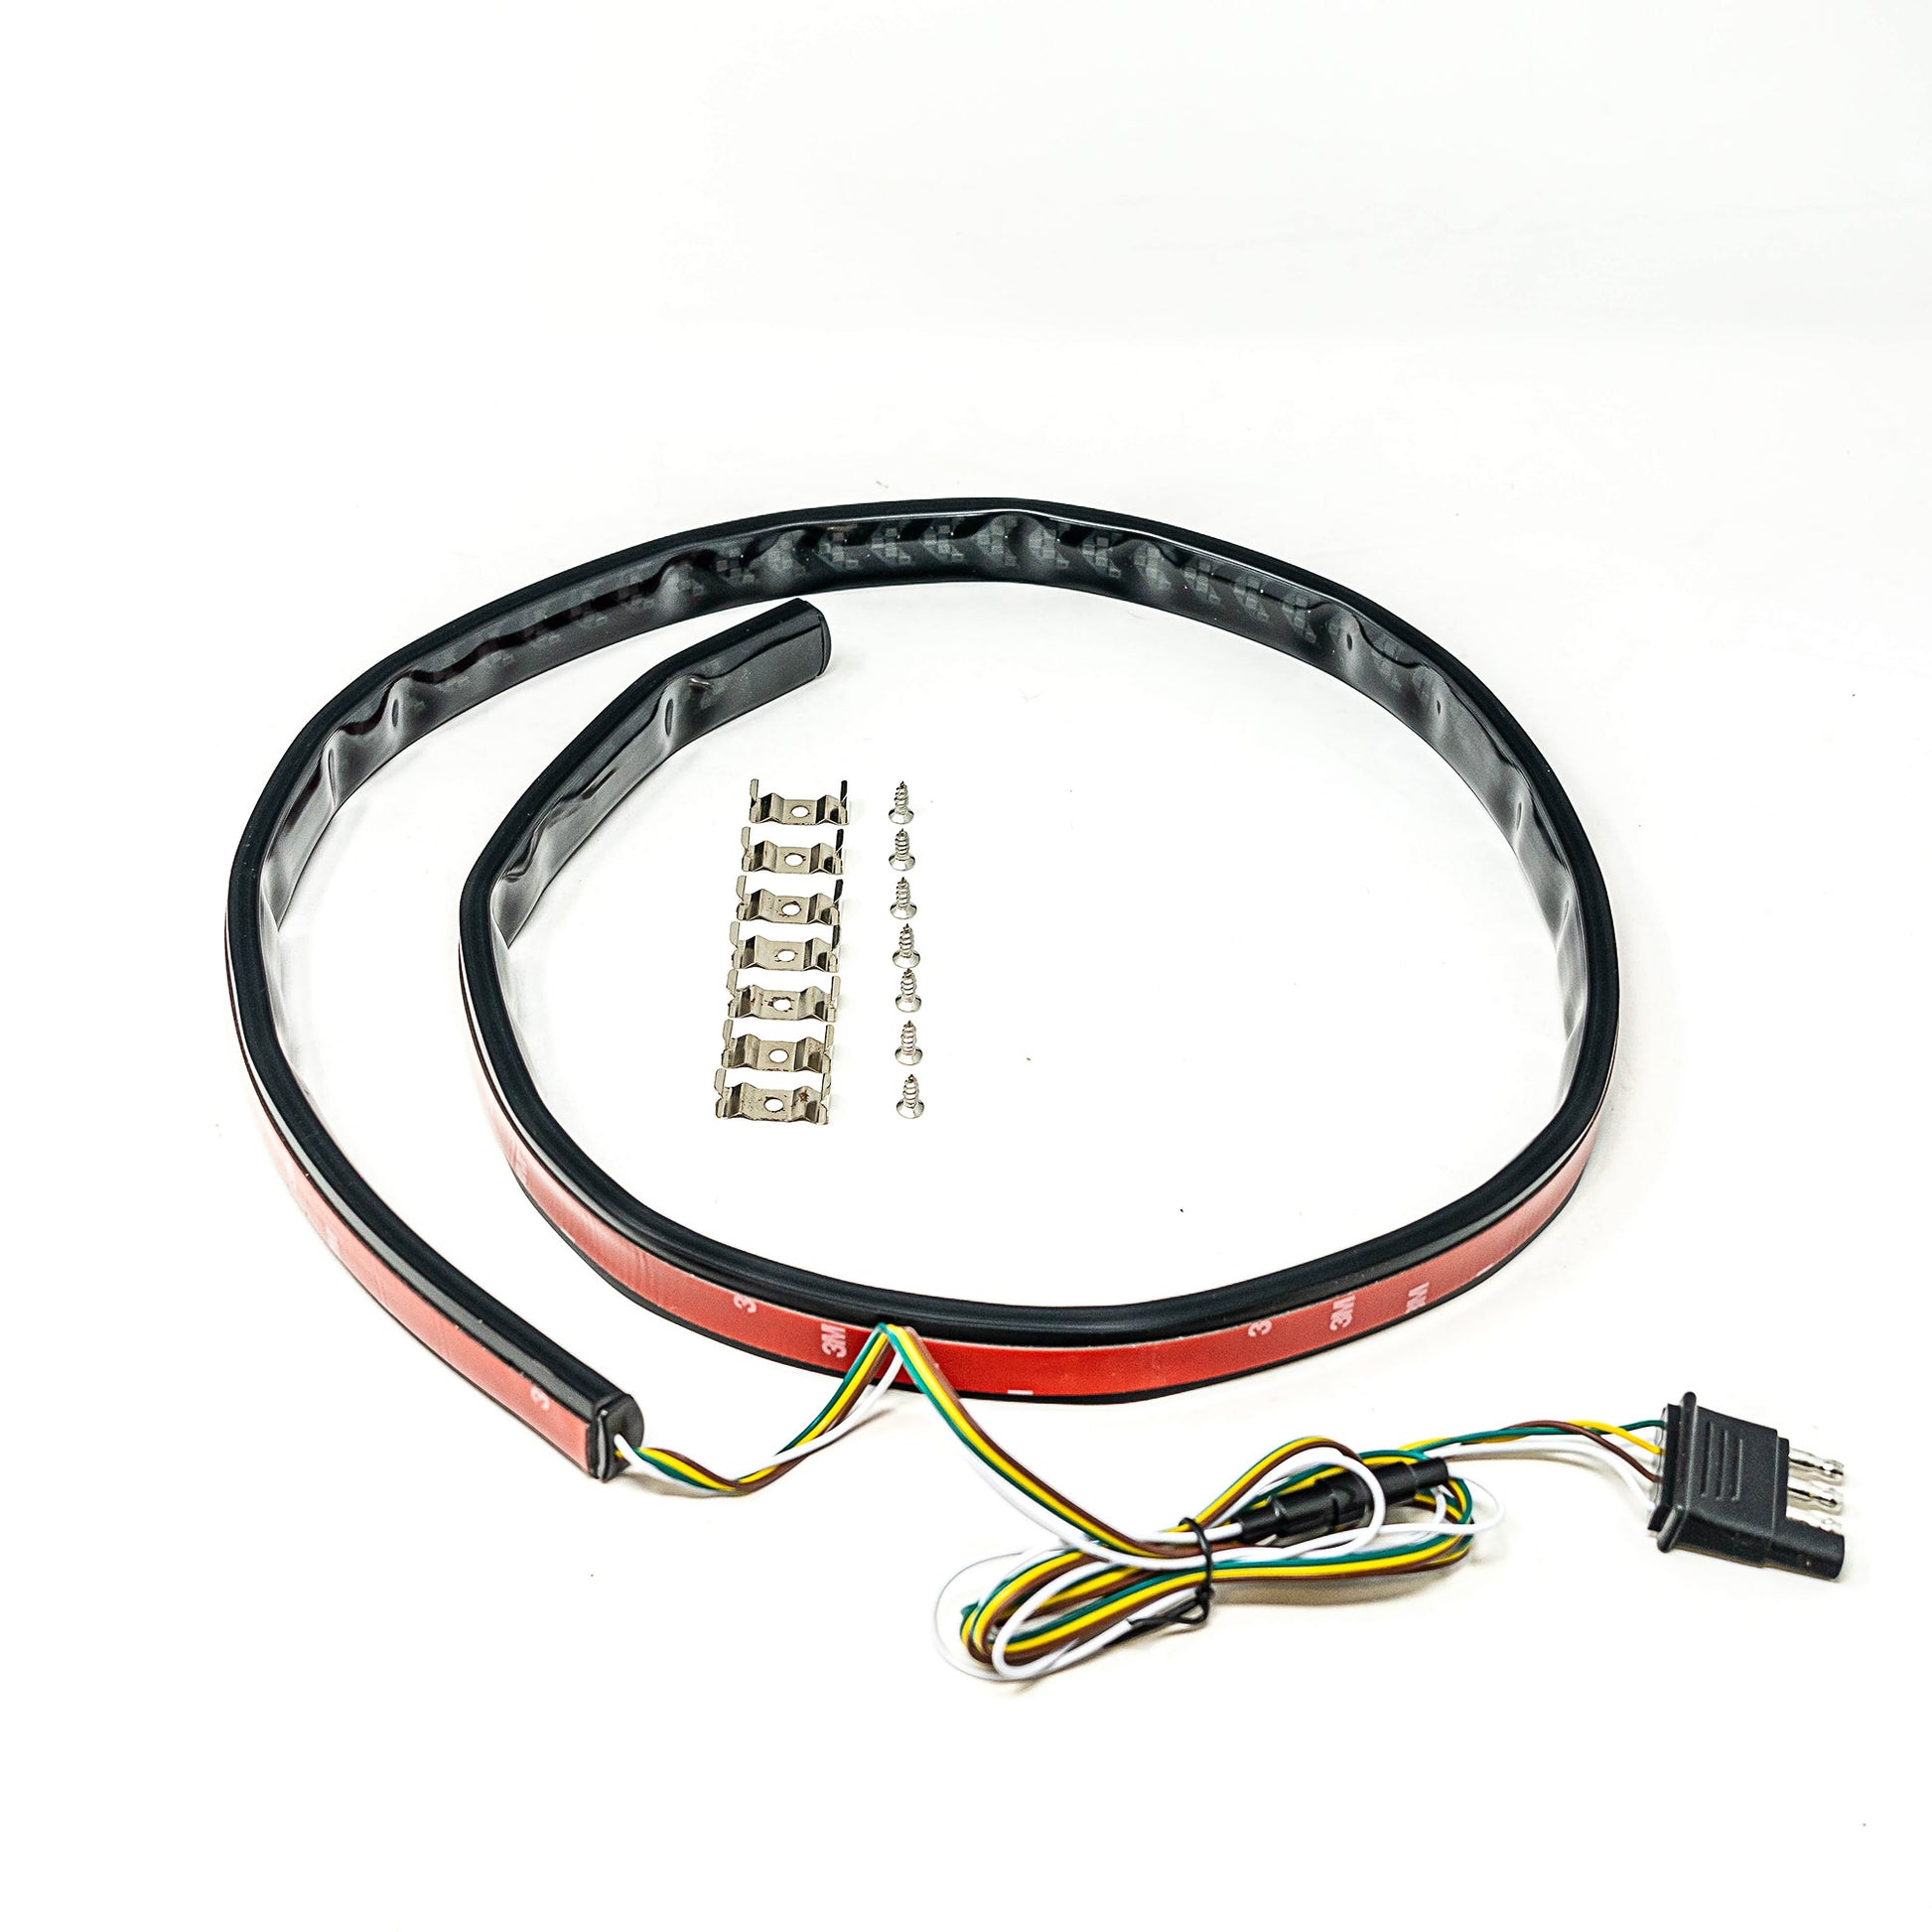 Flexible LED Light Strips w/Adapter - Peel & Stick